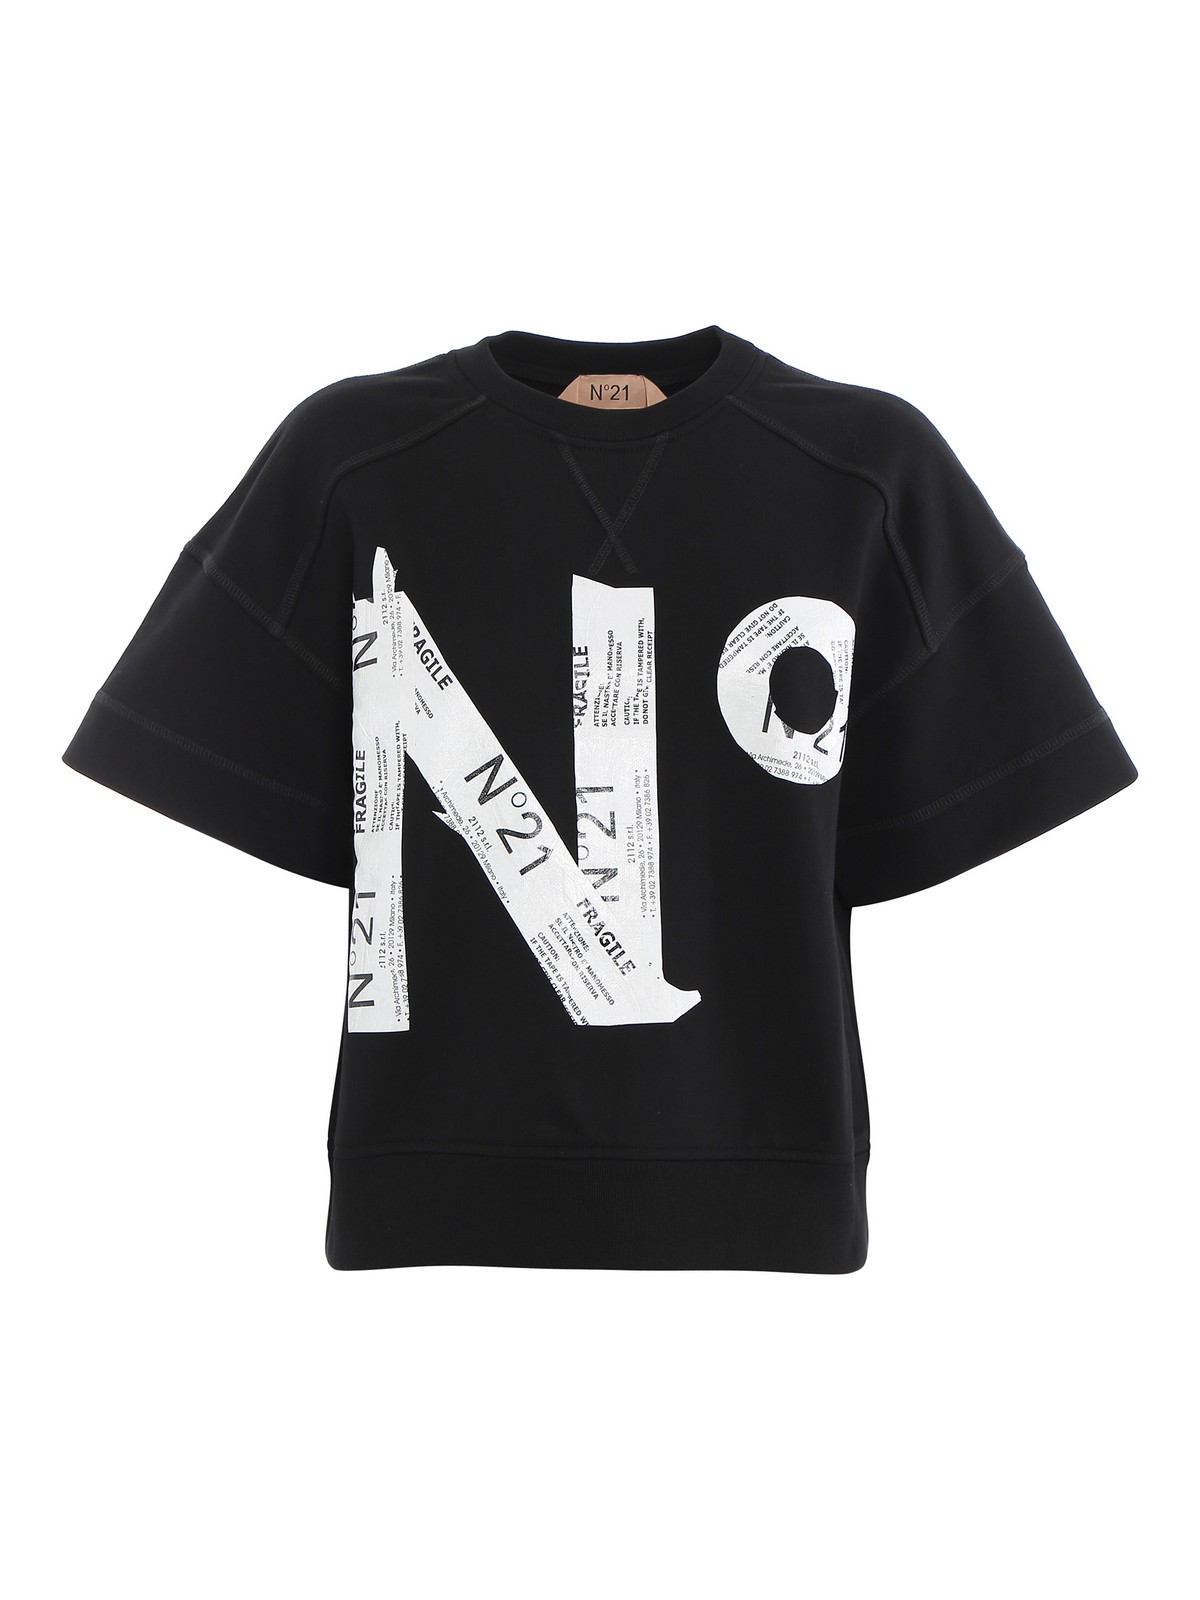 N.21, Sweat-shirt